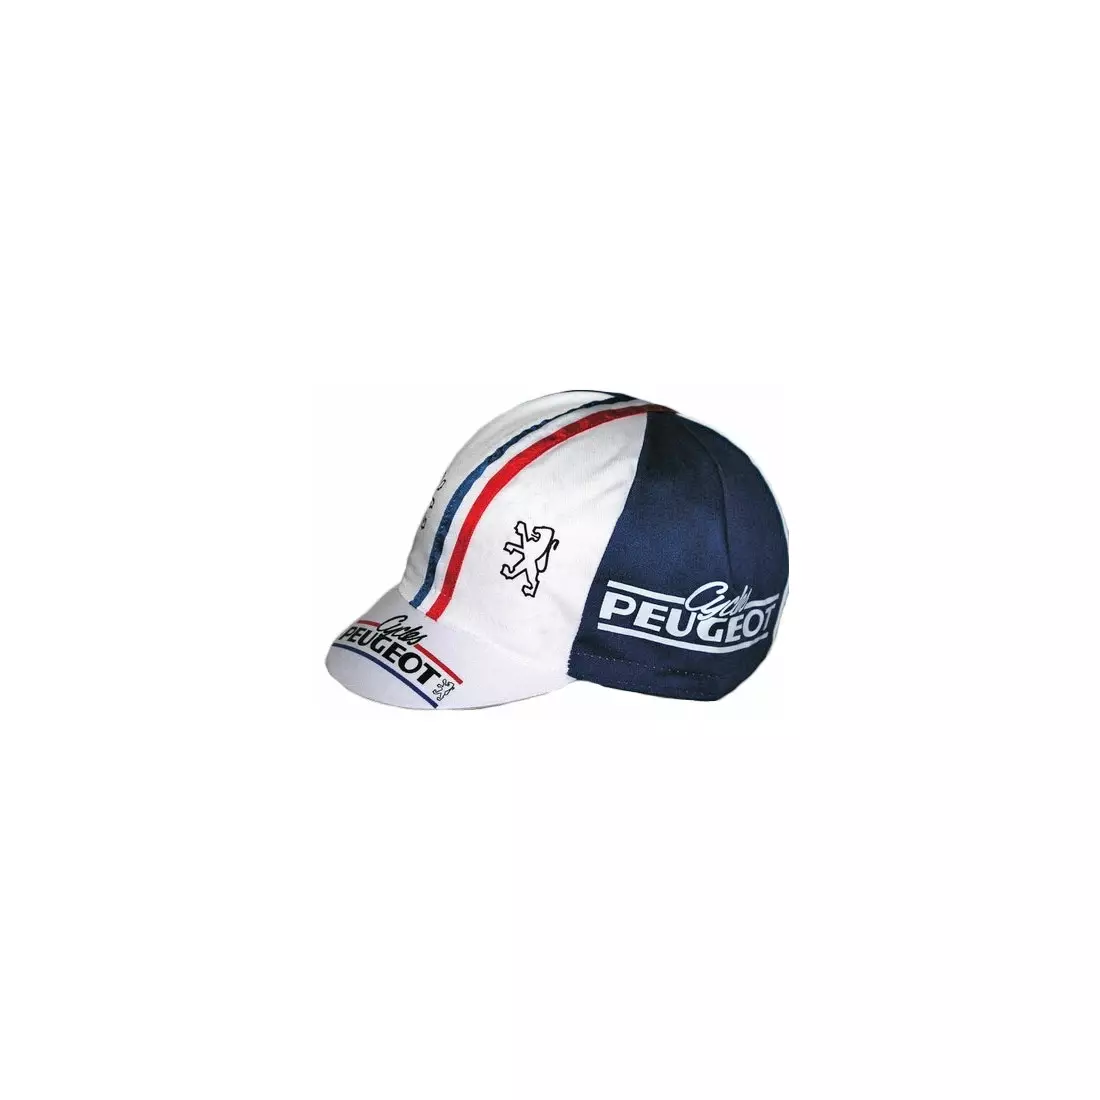 Apis Profi PEUGEOT cycling cap, white and blue